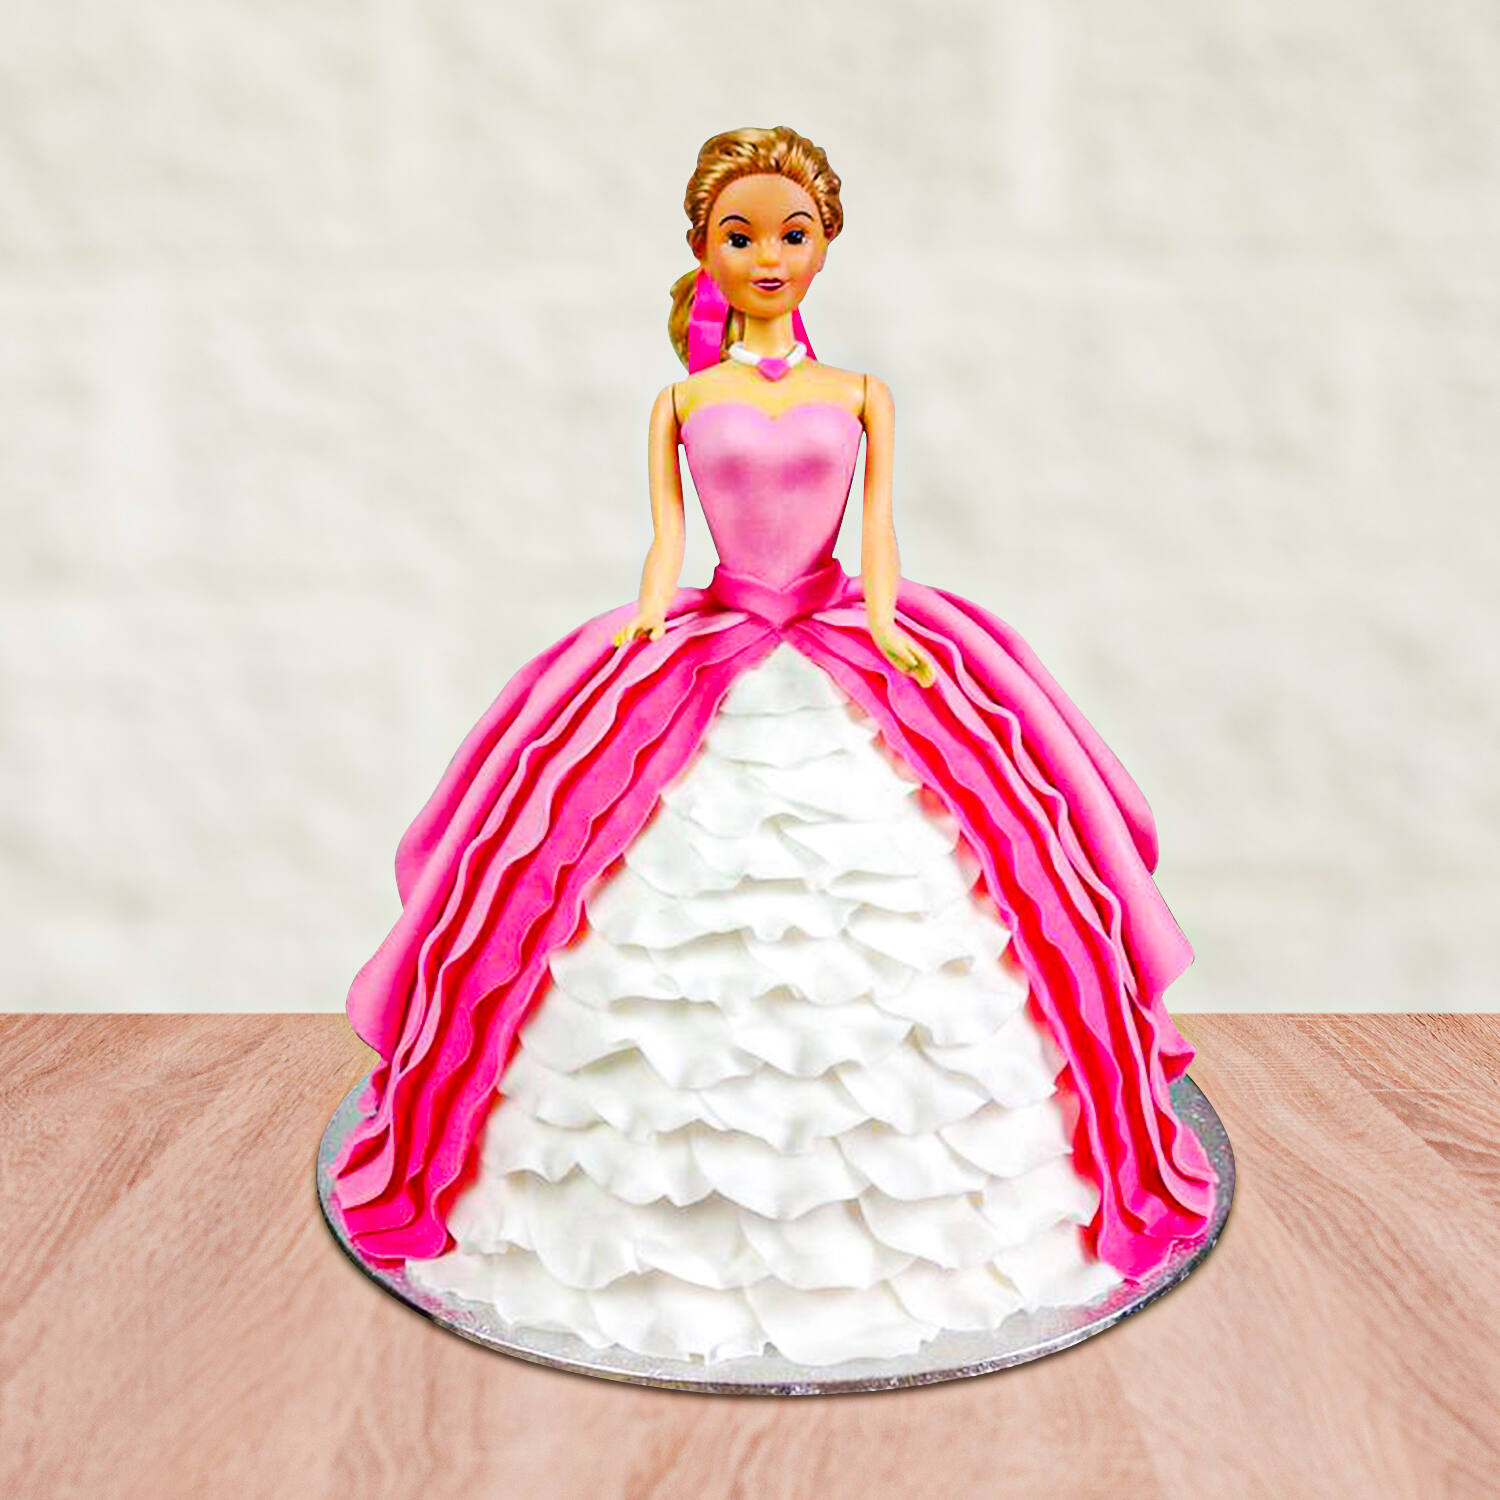 12+ Coolest Disney Princess Cake Ideas - Awesome DIY Cake Decorating!